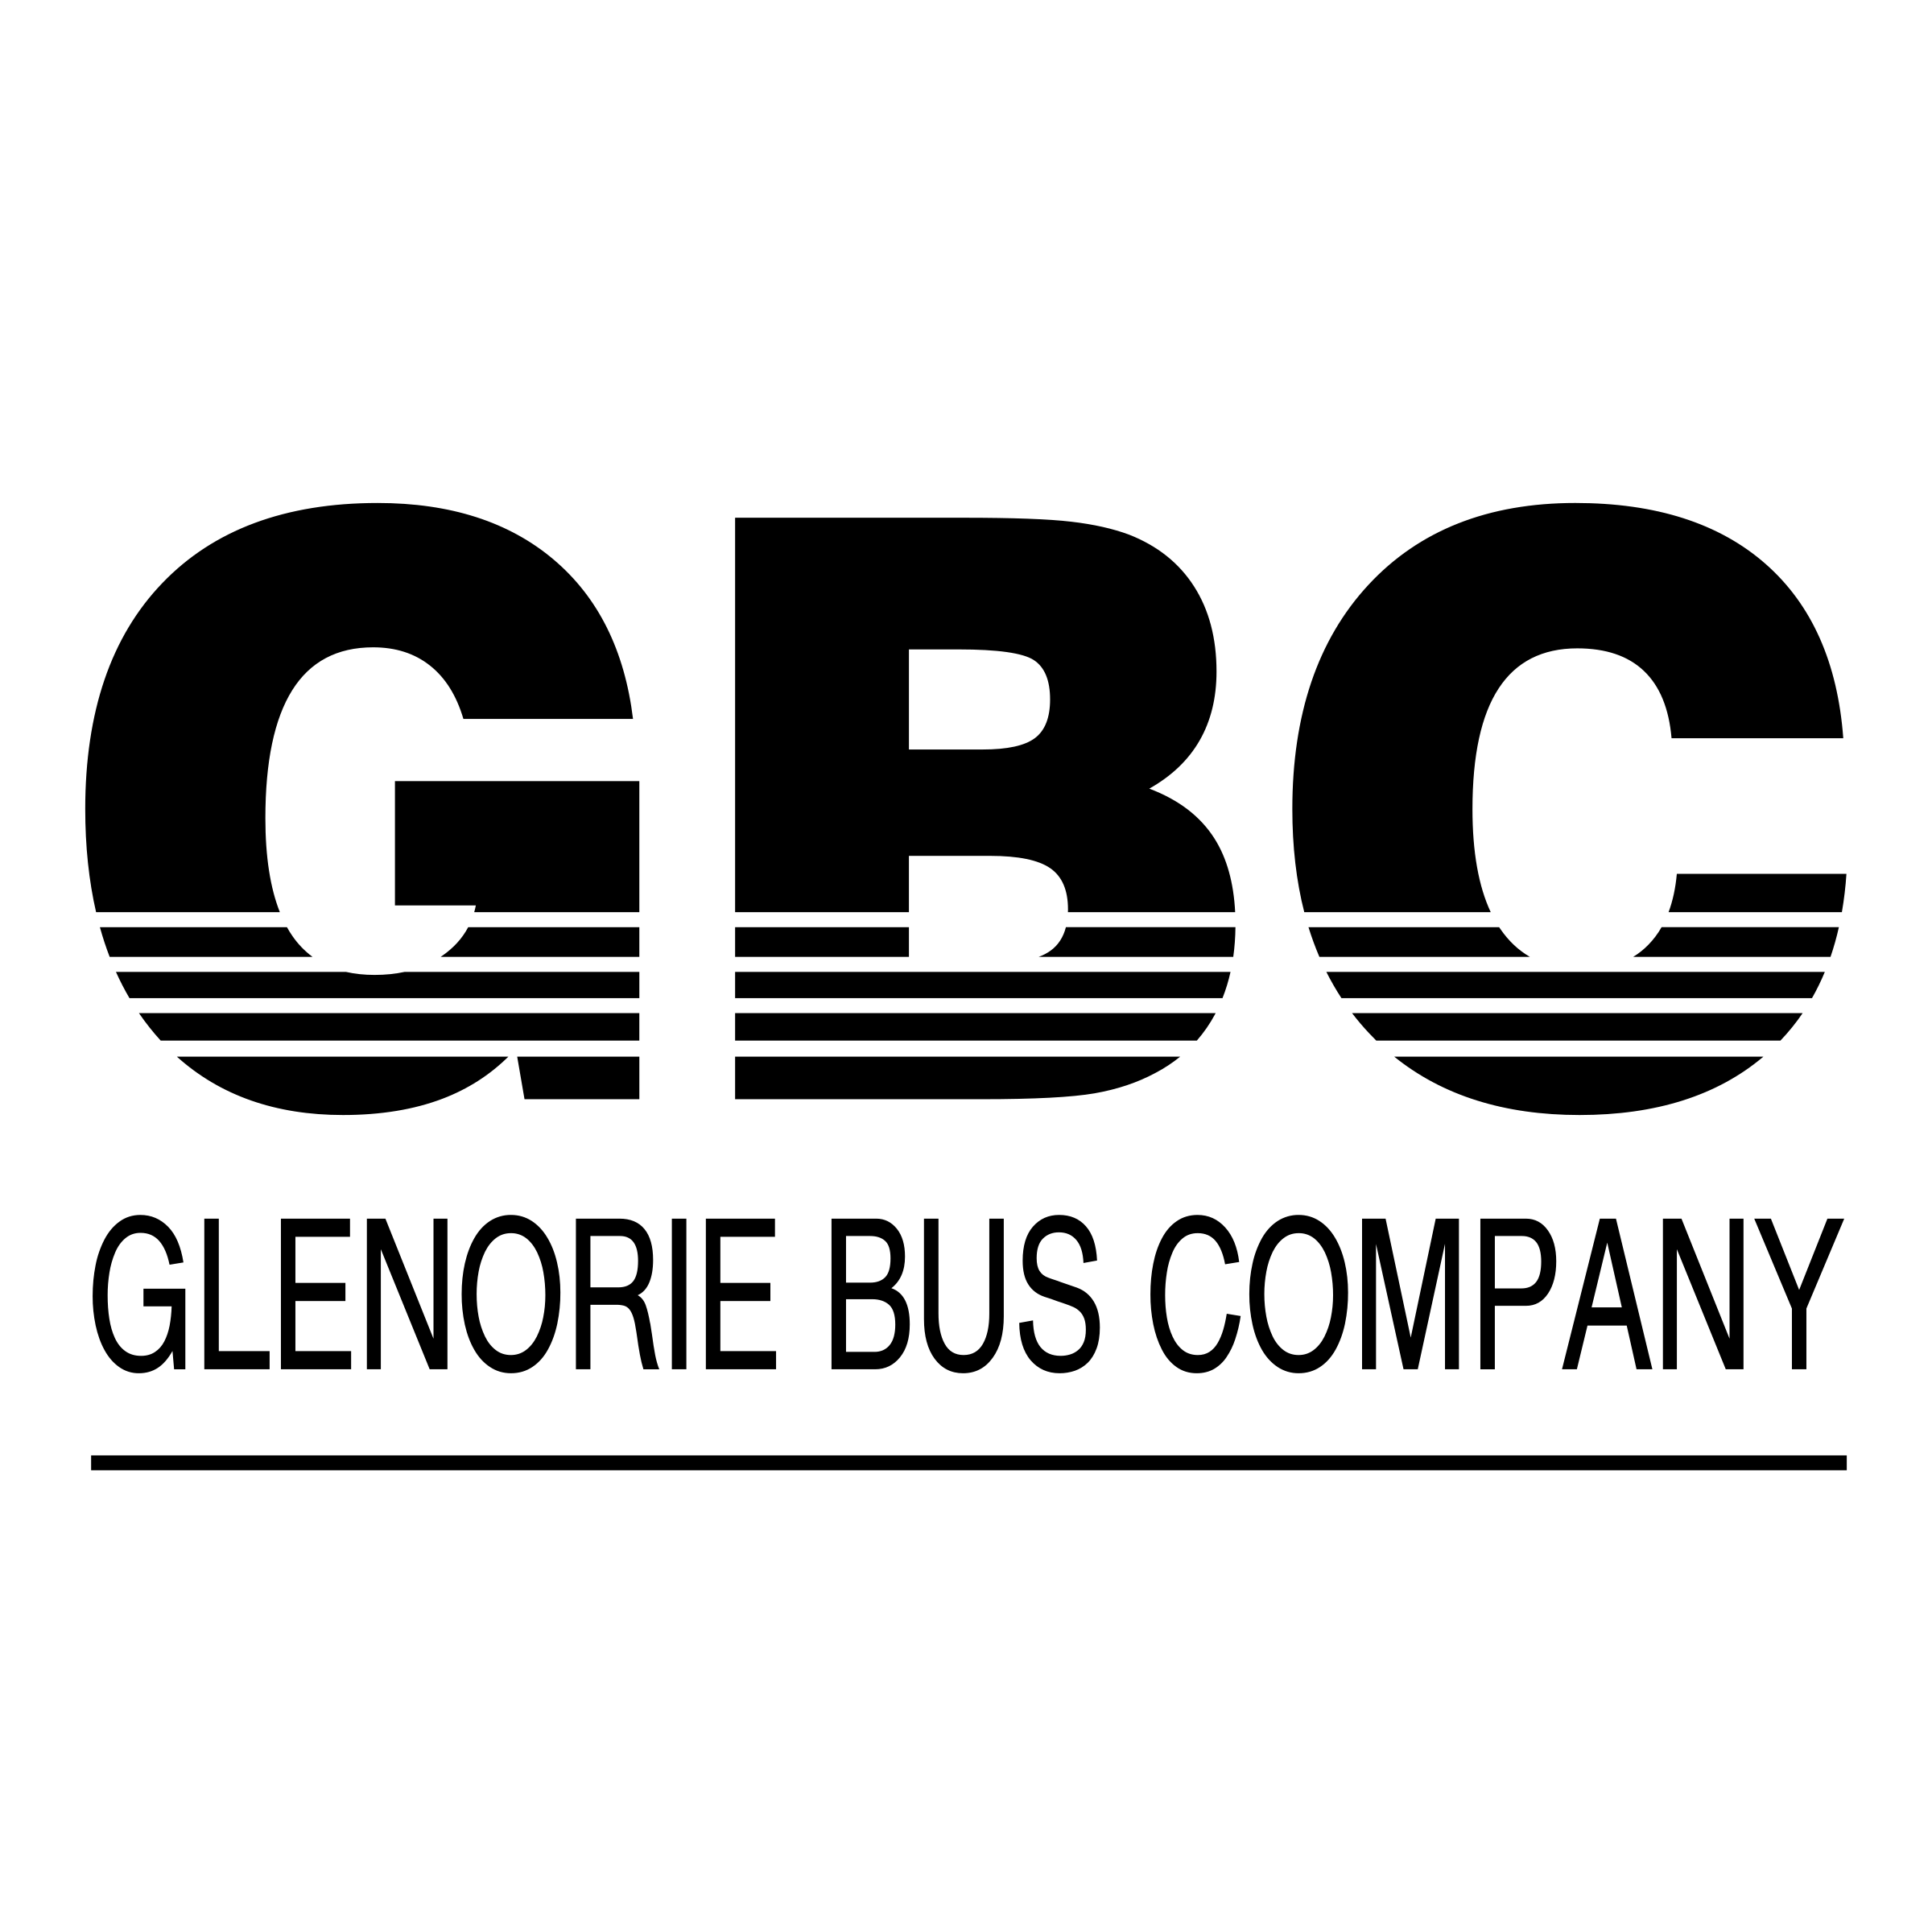 GBC Logo - GBC Logo PNG Transparent & SVG Vector - Freebie Supply